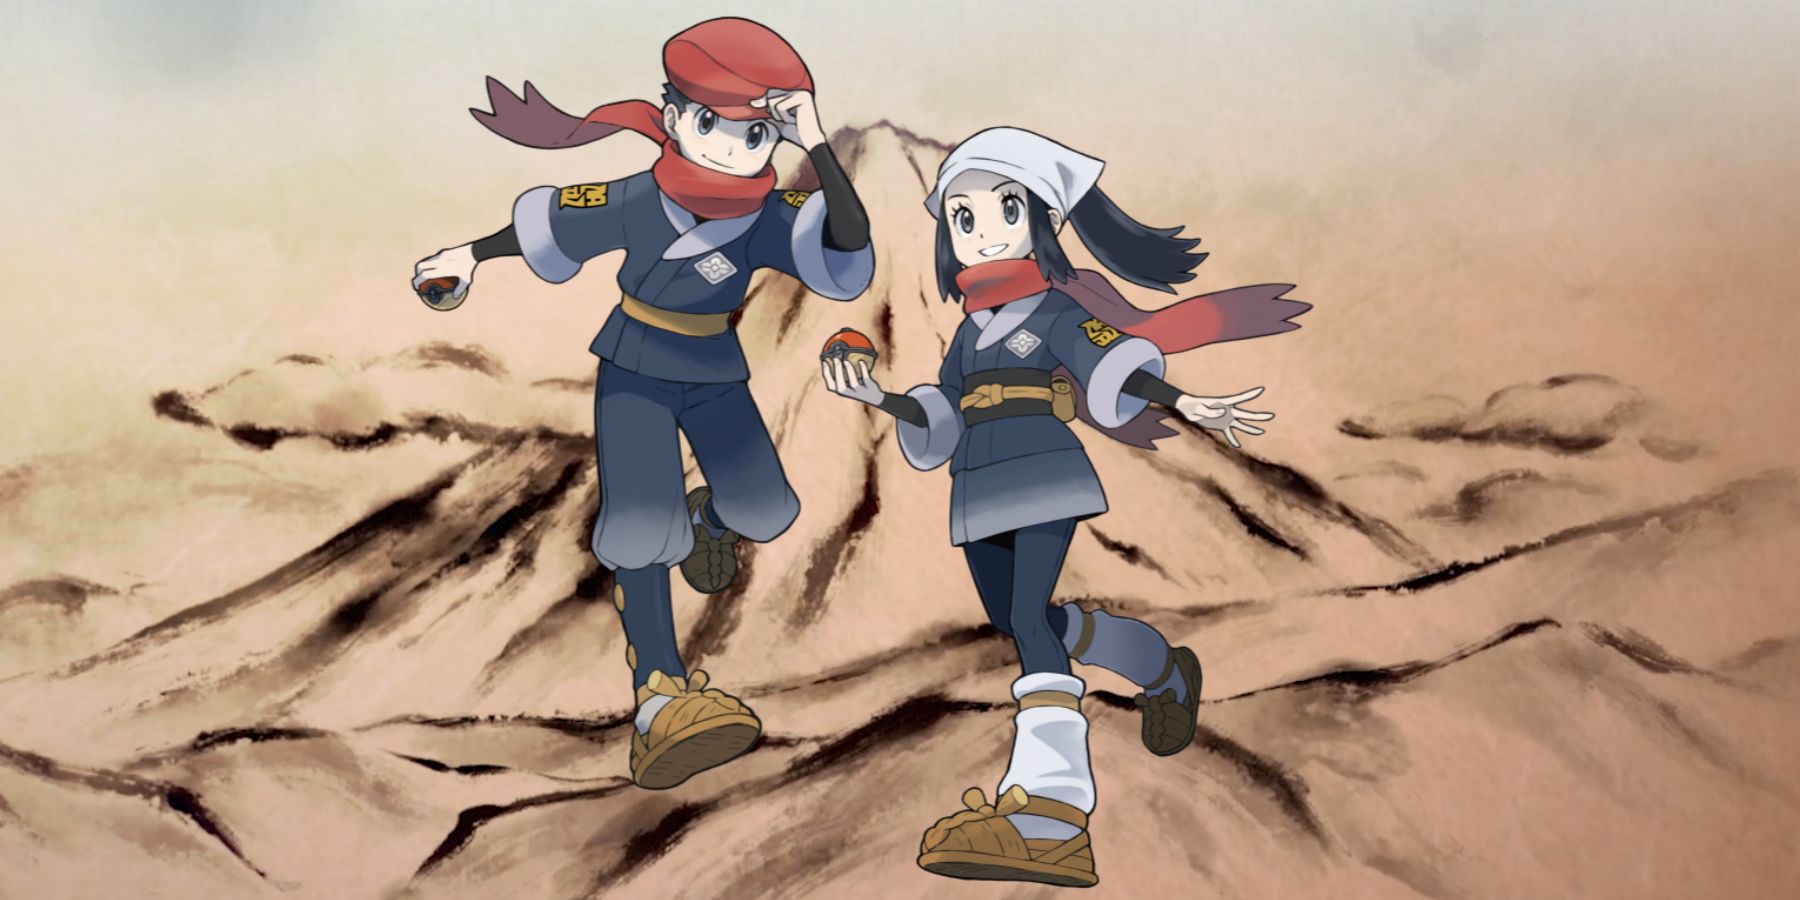 Pokemon Legends Arceus Akari And Rei